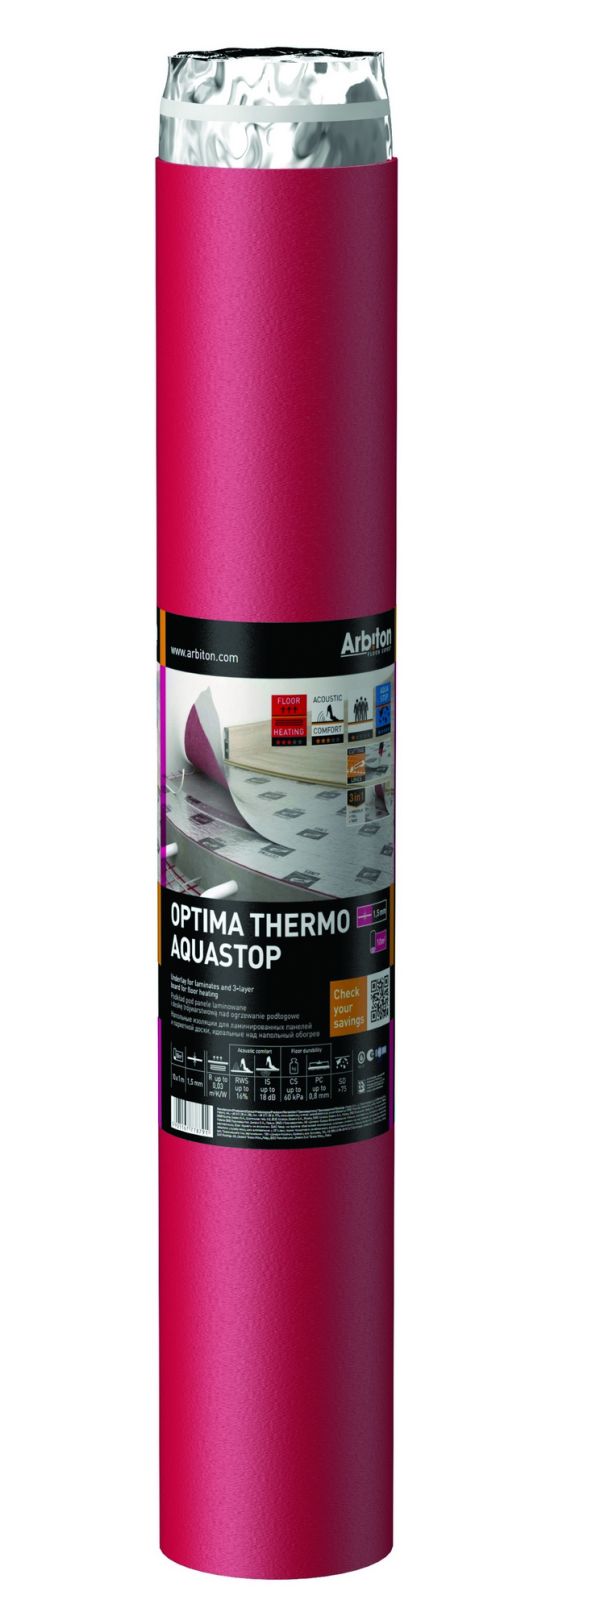 Подложка Arbiton Optima Thermo Aquastop 1 5 мм PEHD пароизоляция скотч - фото 2